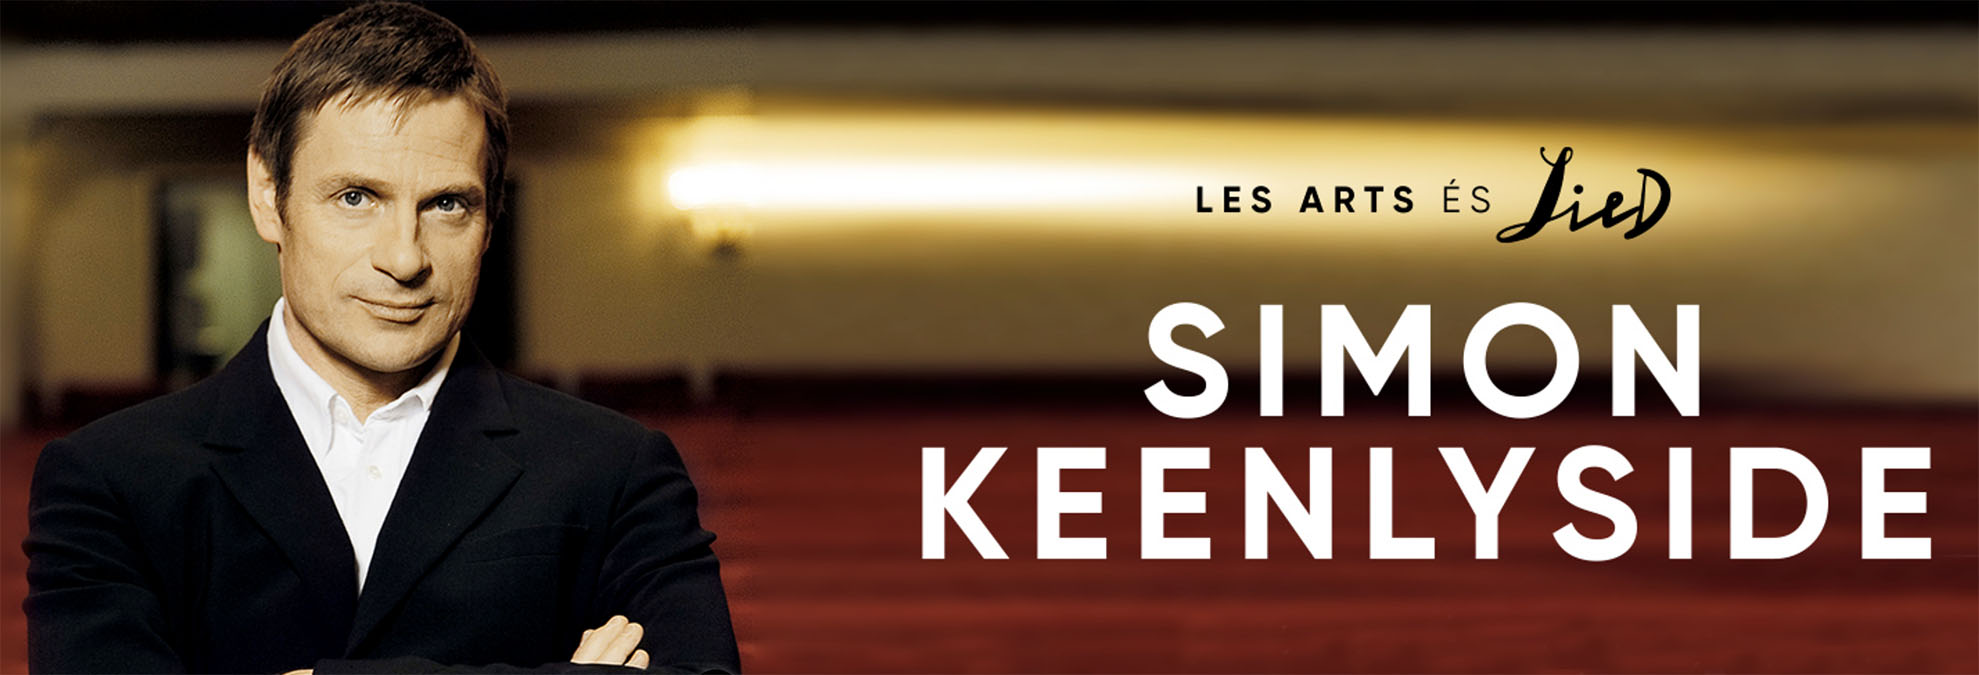 Simon Keenlyside dedica su recital de ‘Les Arts és Lied’ a Schubert y a la ‘mélodie’ francesa